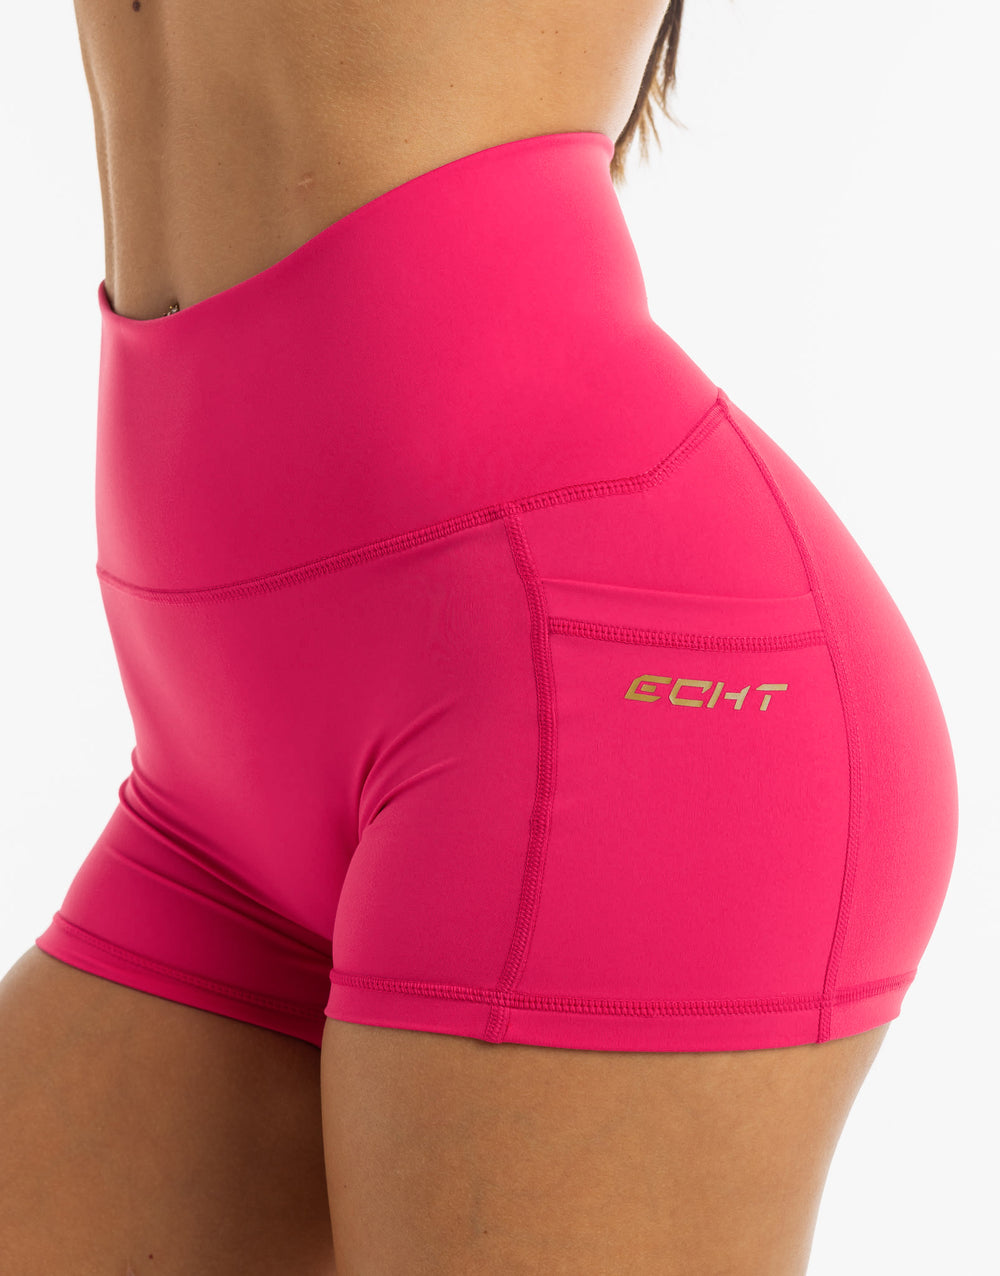 Ultra Pocket Shorts - Bright Pink